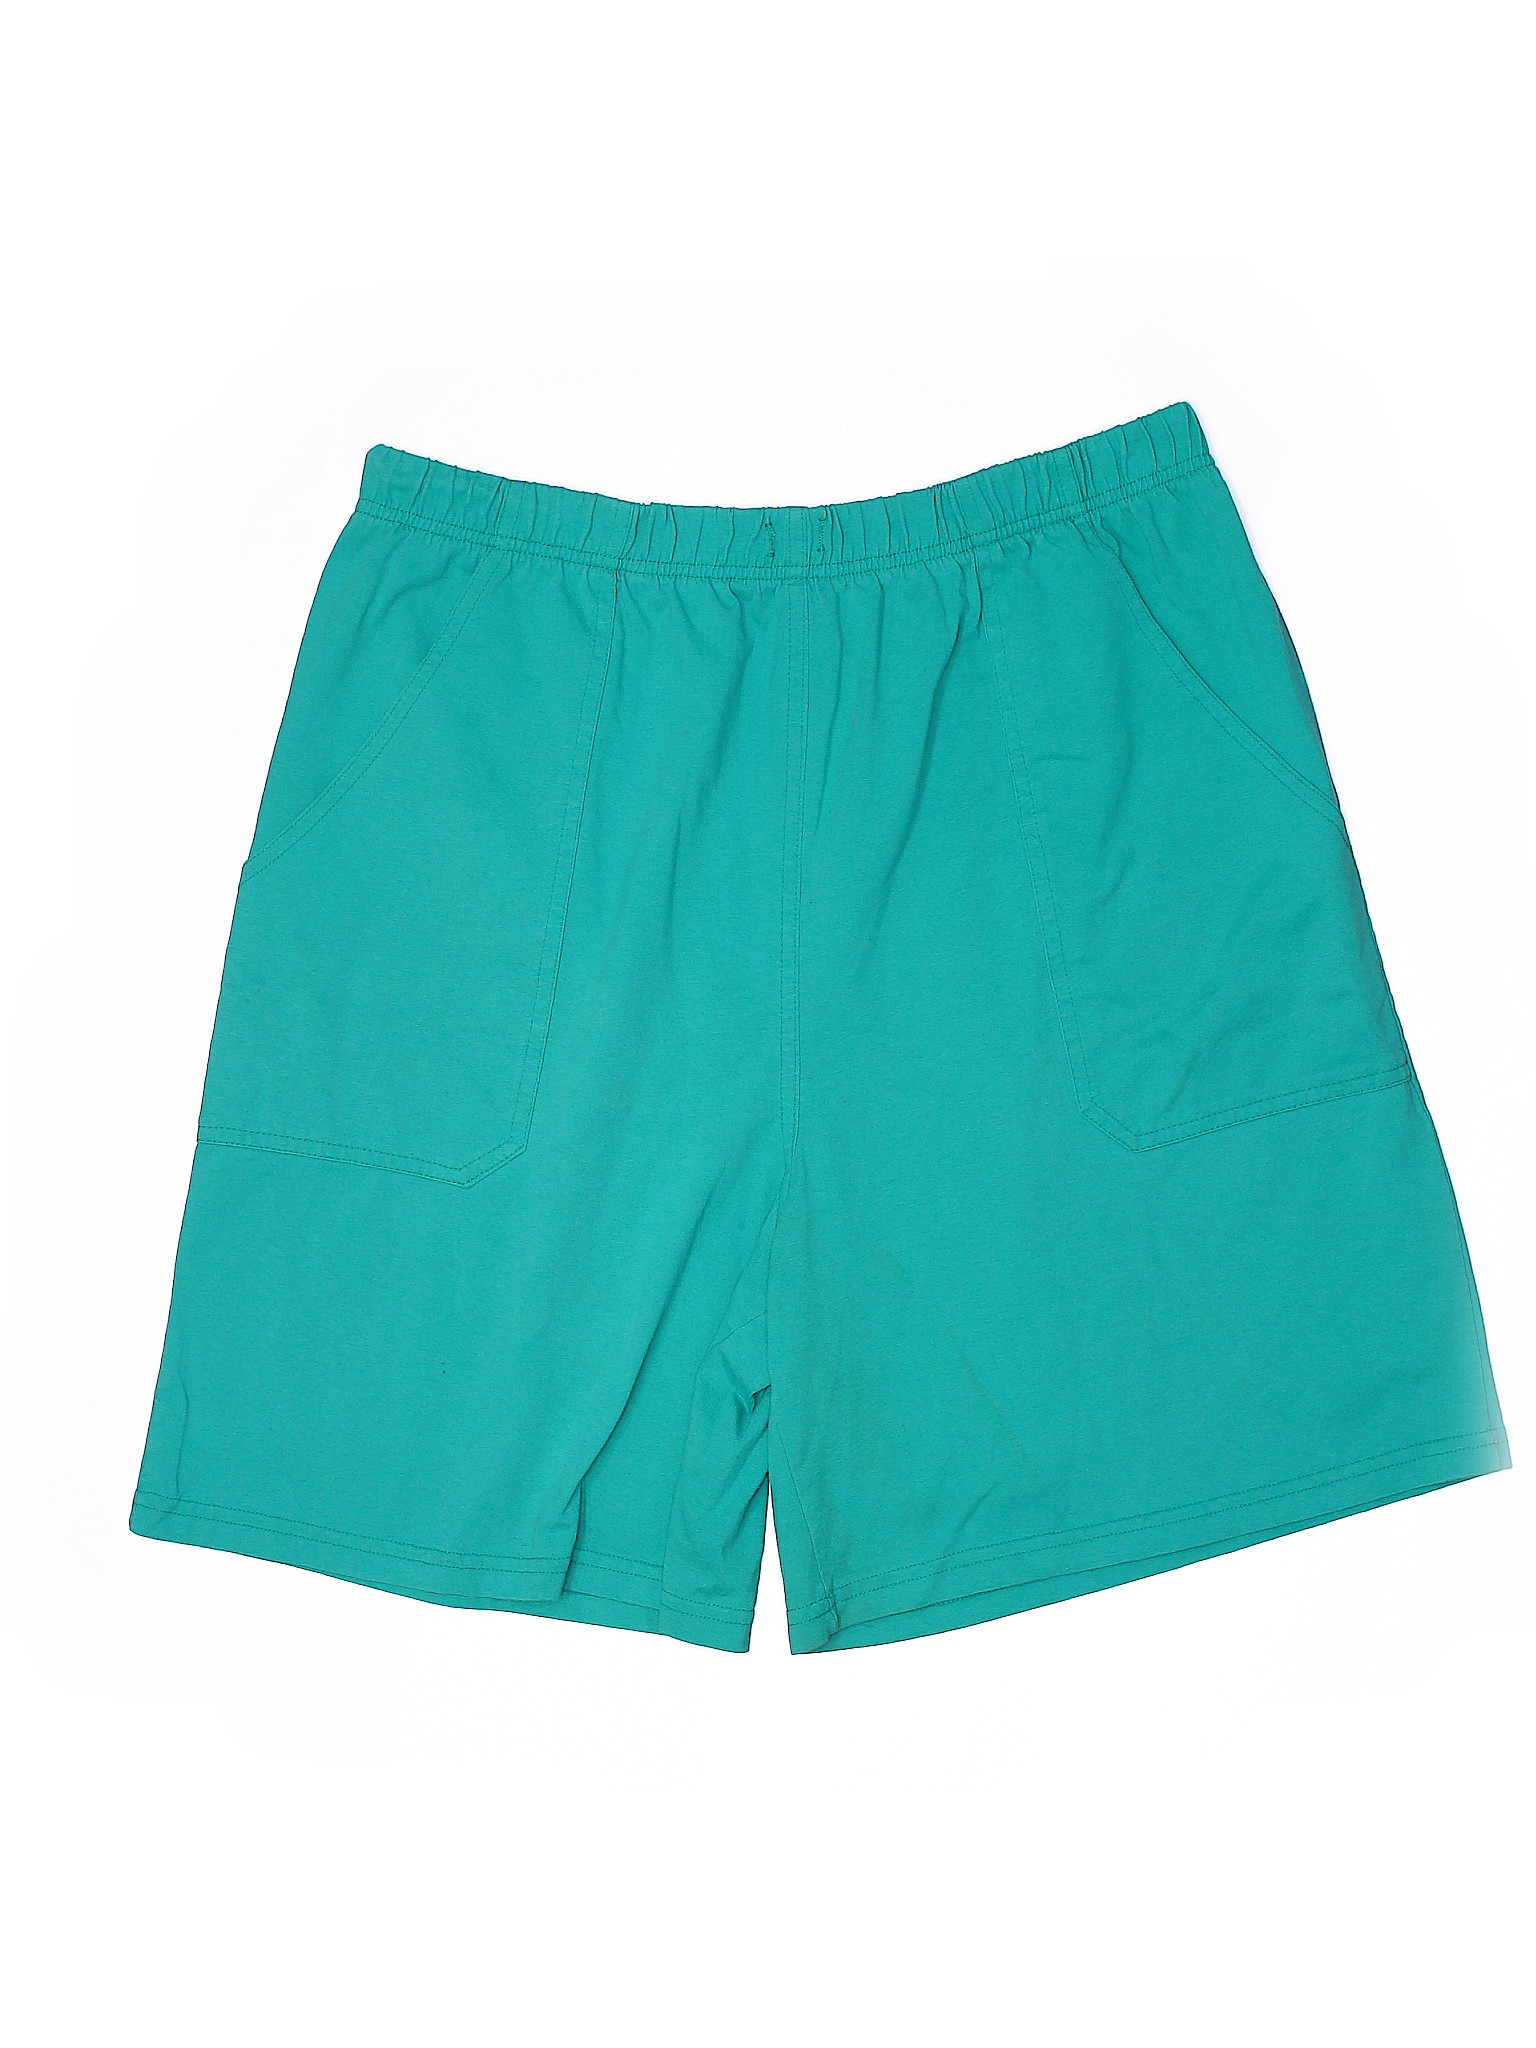 Bobbie Brooks Solid Teal Blue Shorts Size 18 - 20 (Plus) - 41% off ...